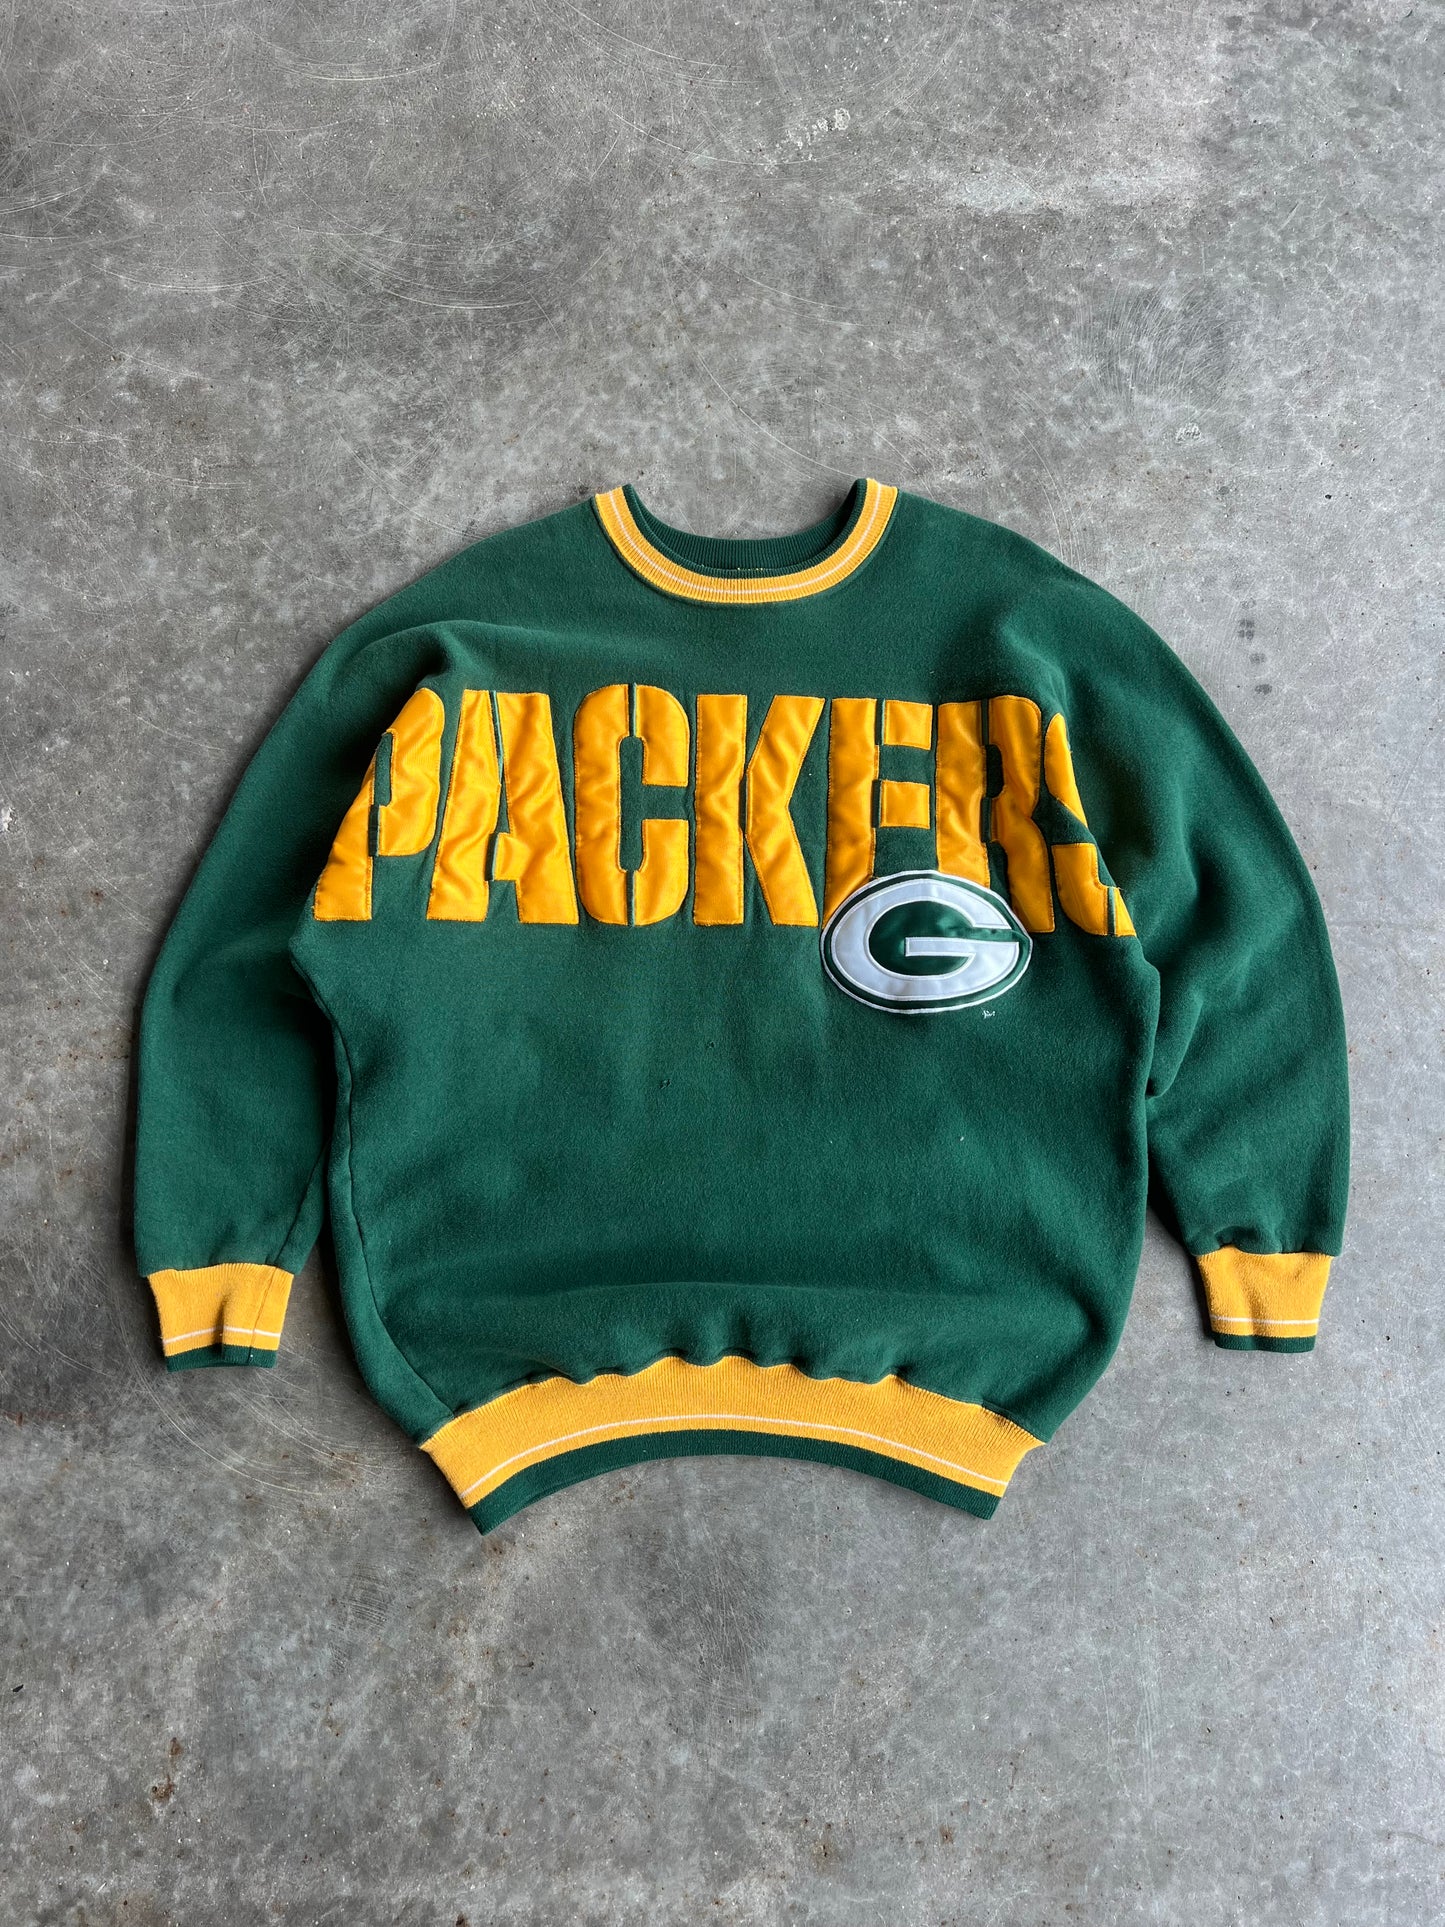 Vintage Packers Crewneck - L